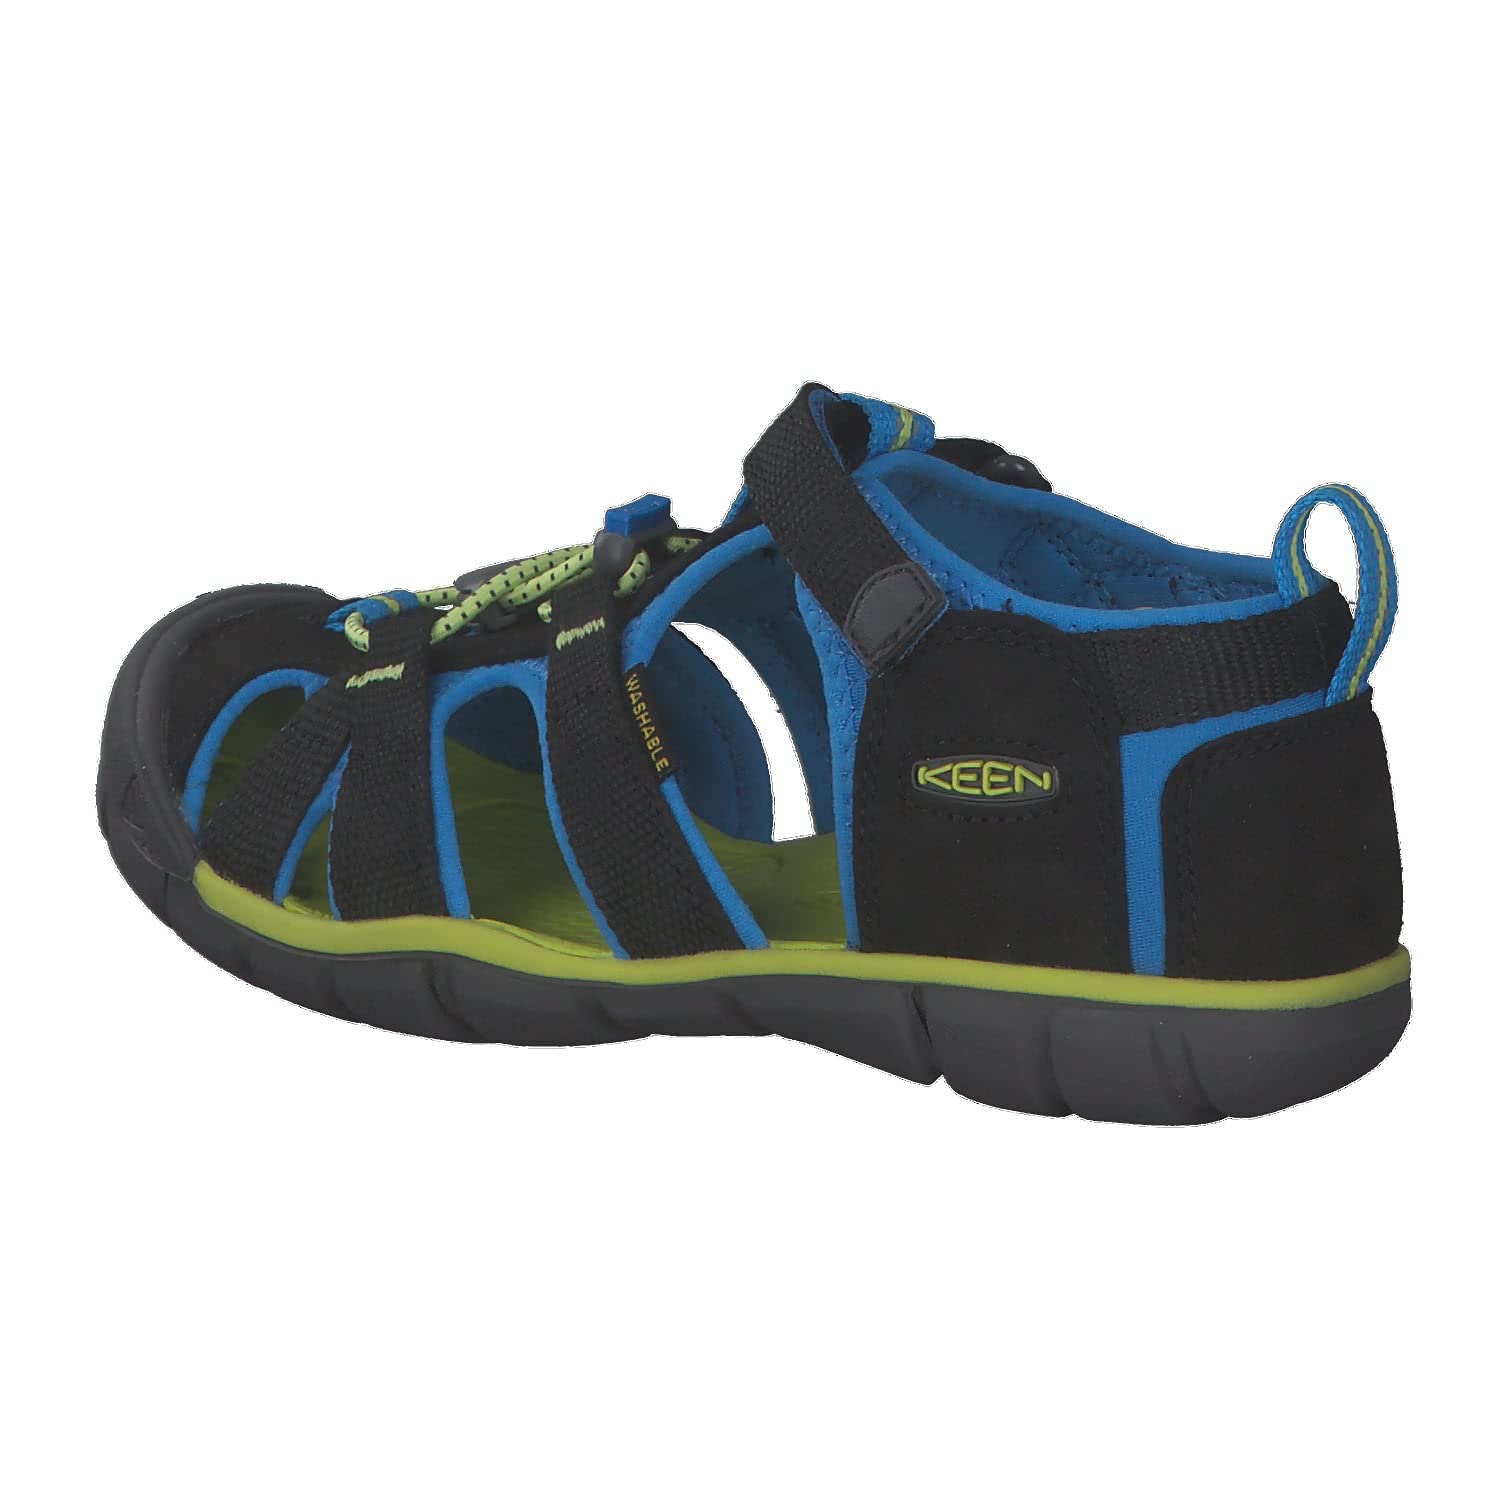 KEEN Unisex-Child Seacamp 2 CNX Closed Toe Sandals, 2 Big Kid US